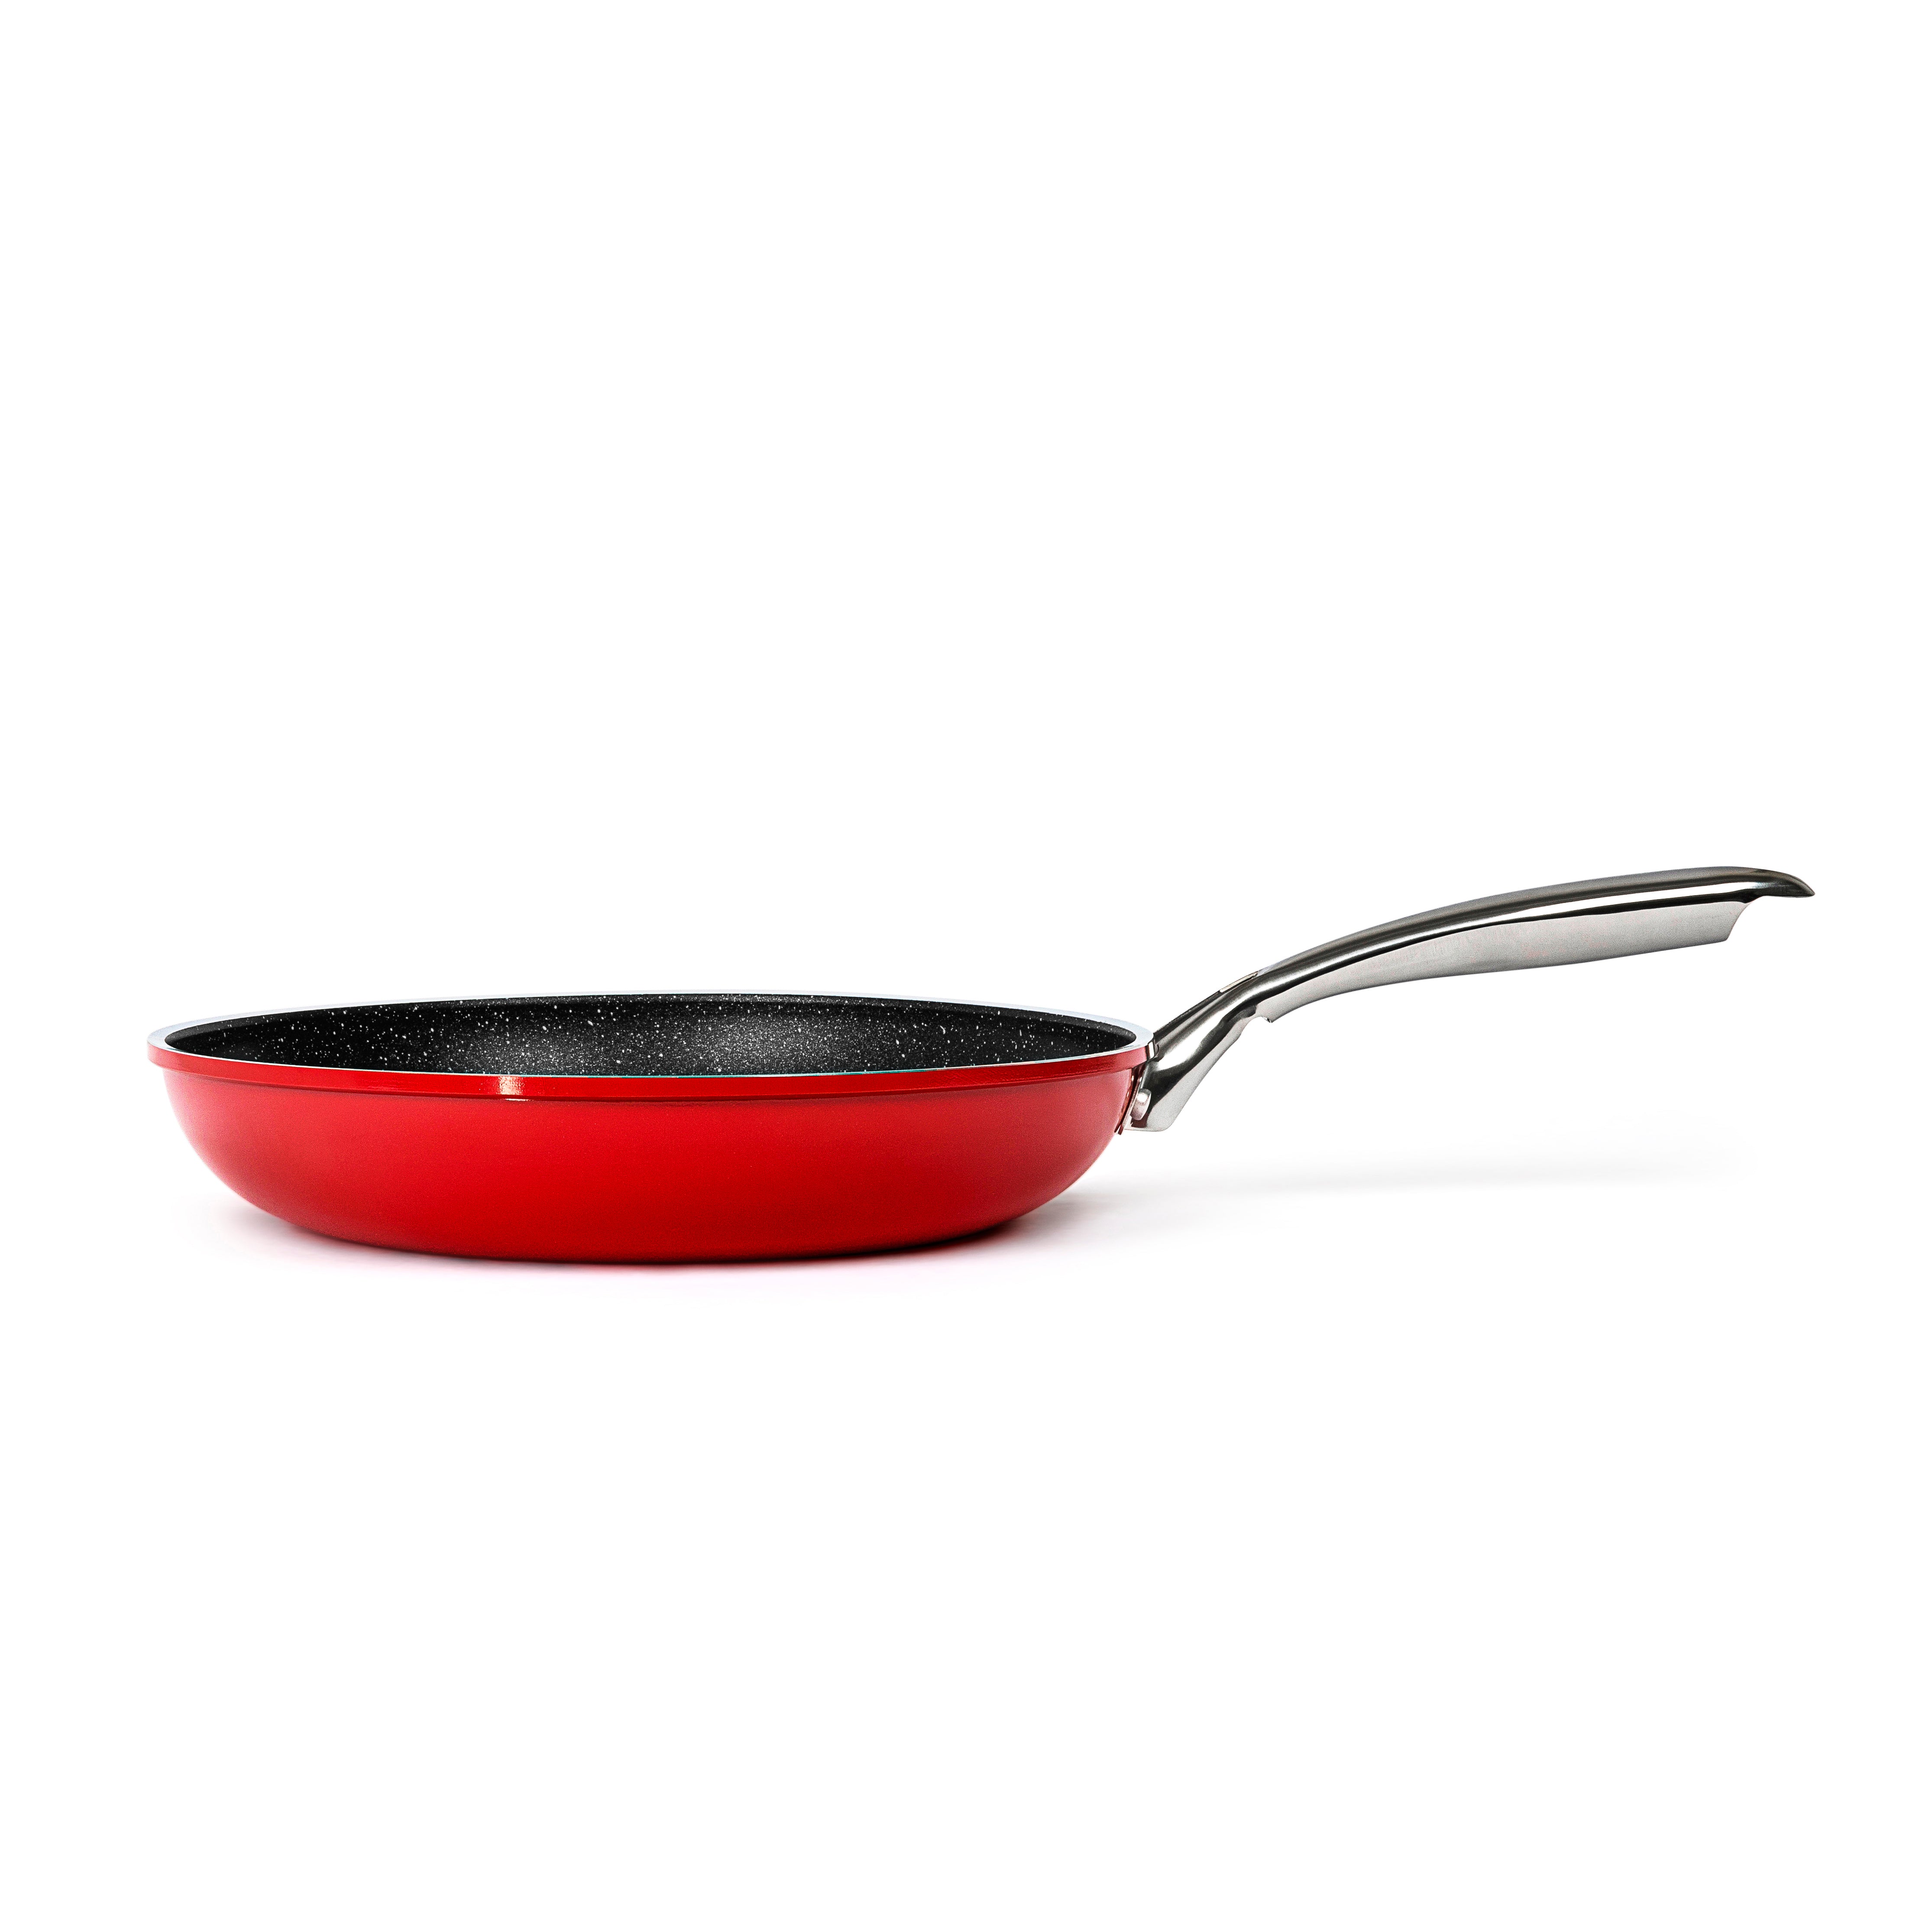 Granitestone Nonstick Frying Pan 10 inch Frying Pan Nonstick Pan, Red